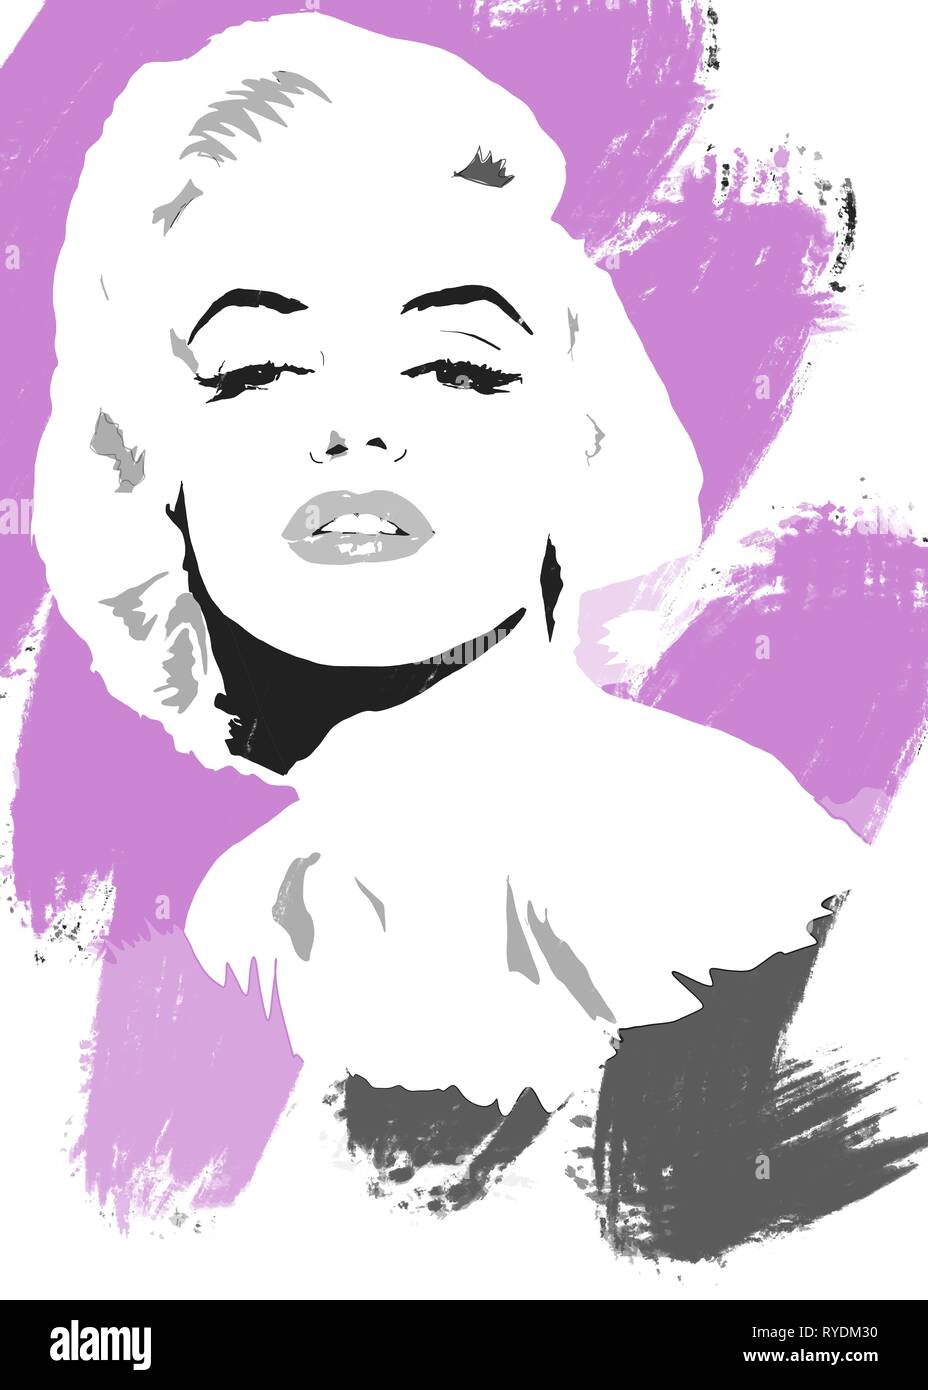 Marilyn monroe illustration Stock Photo - Alamy